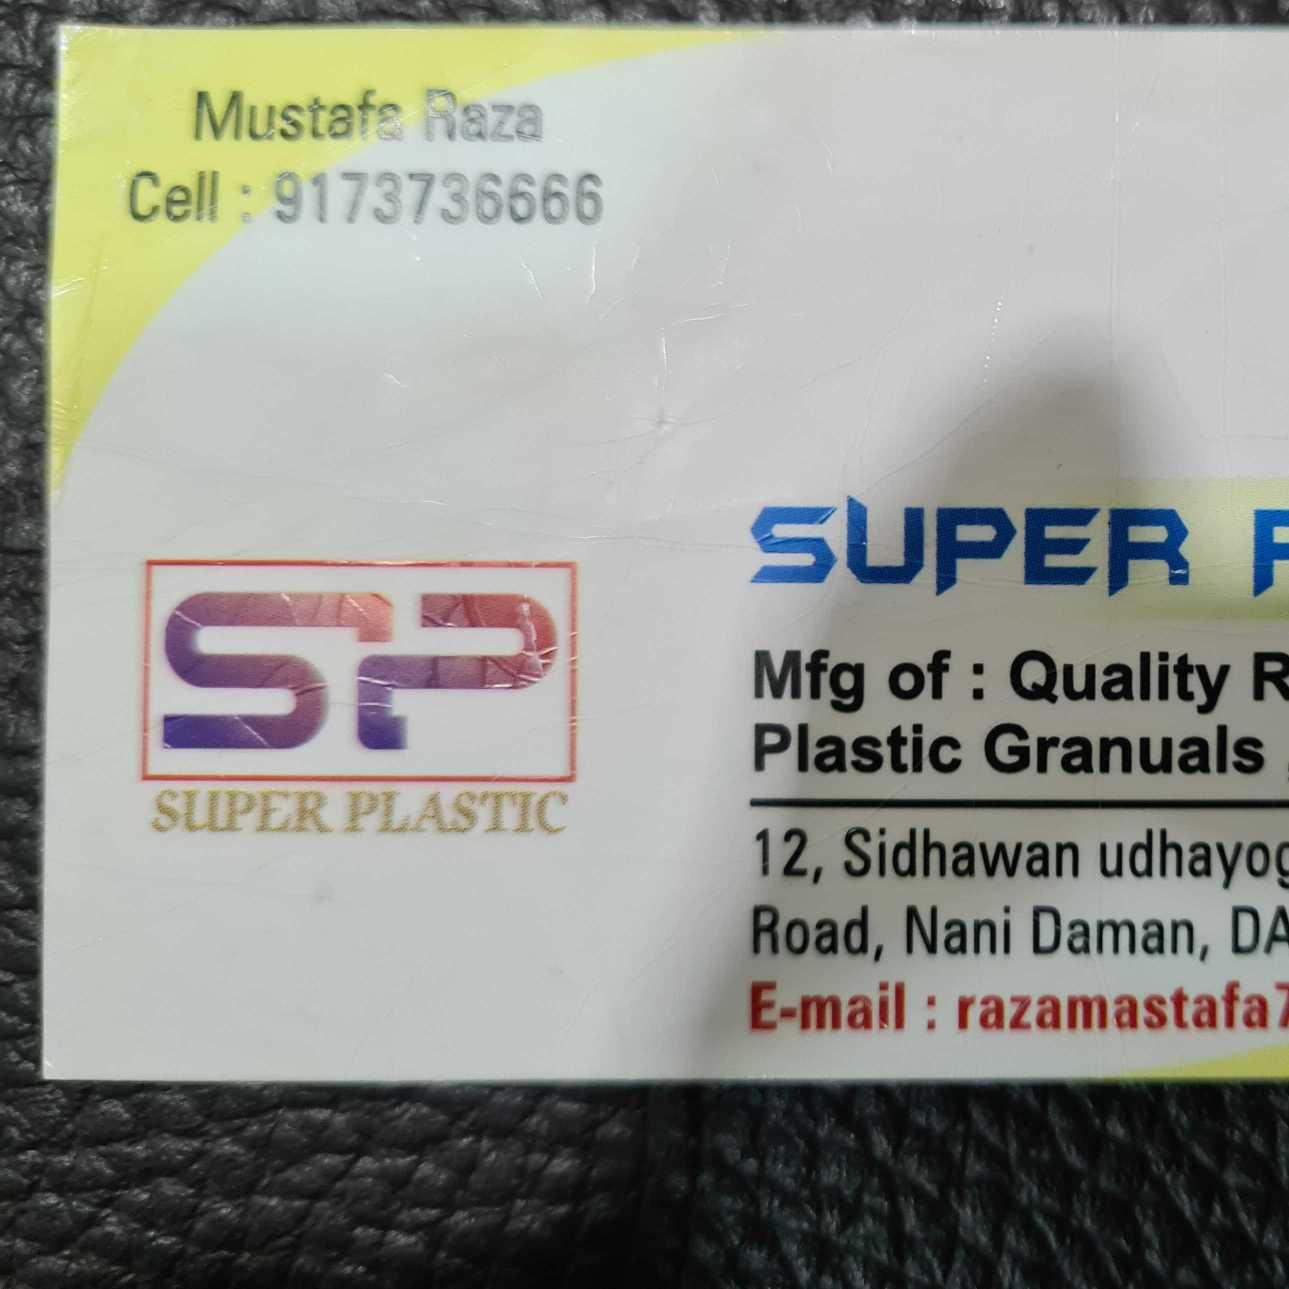 Mustafa Raza Super Plastic dadra and nagar haveli and daman and diu india Plastic4trade